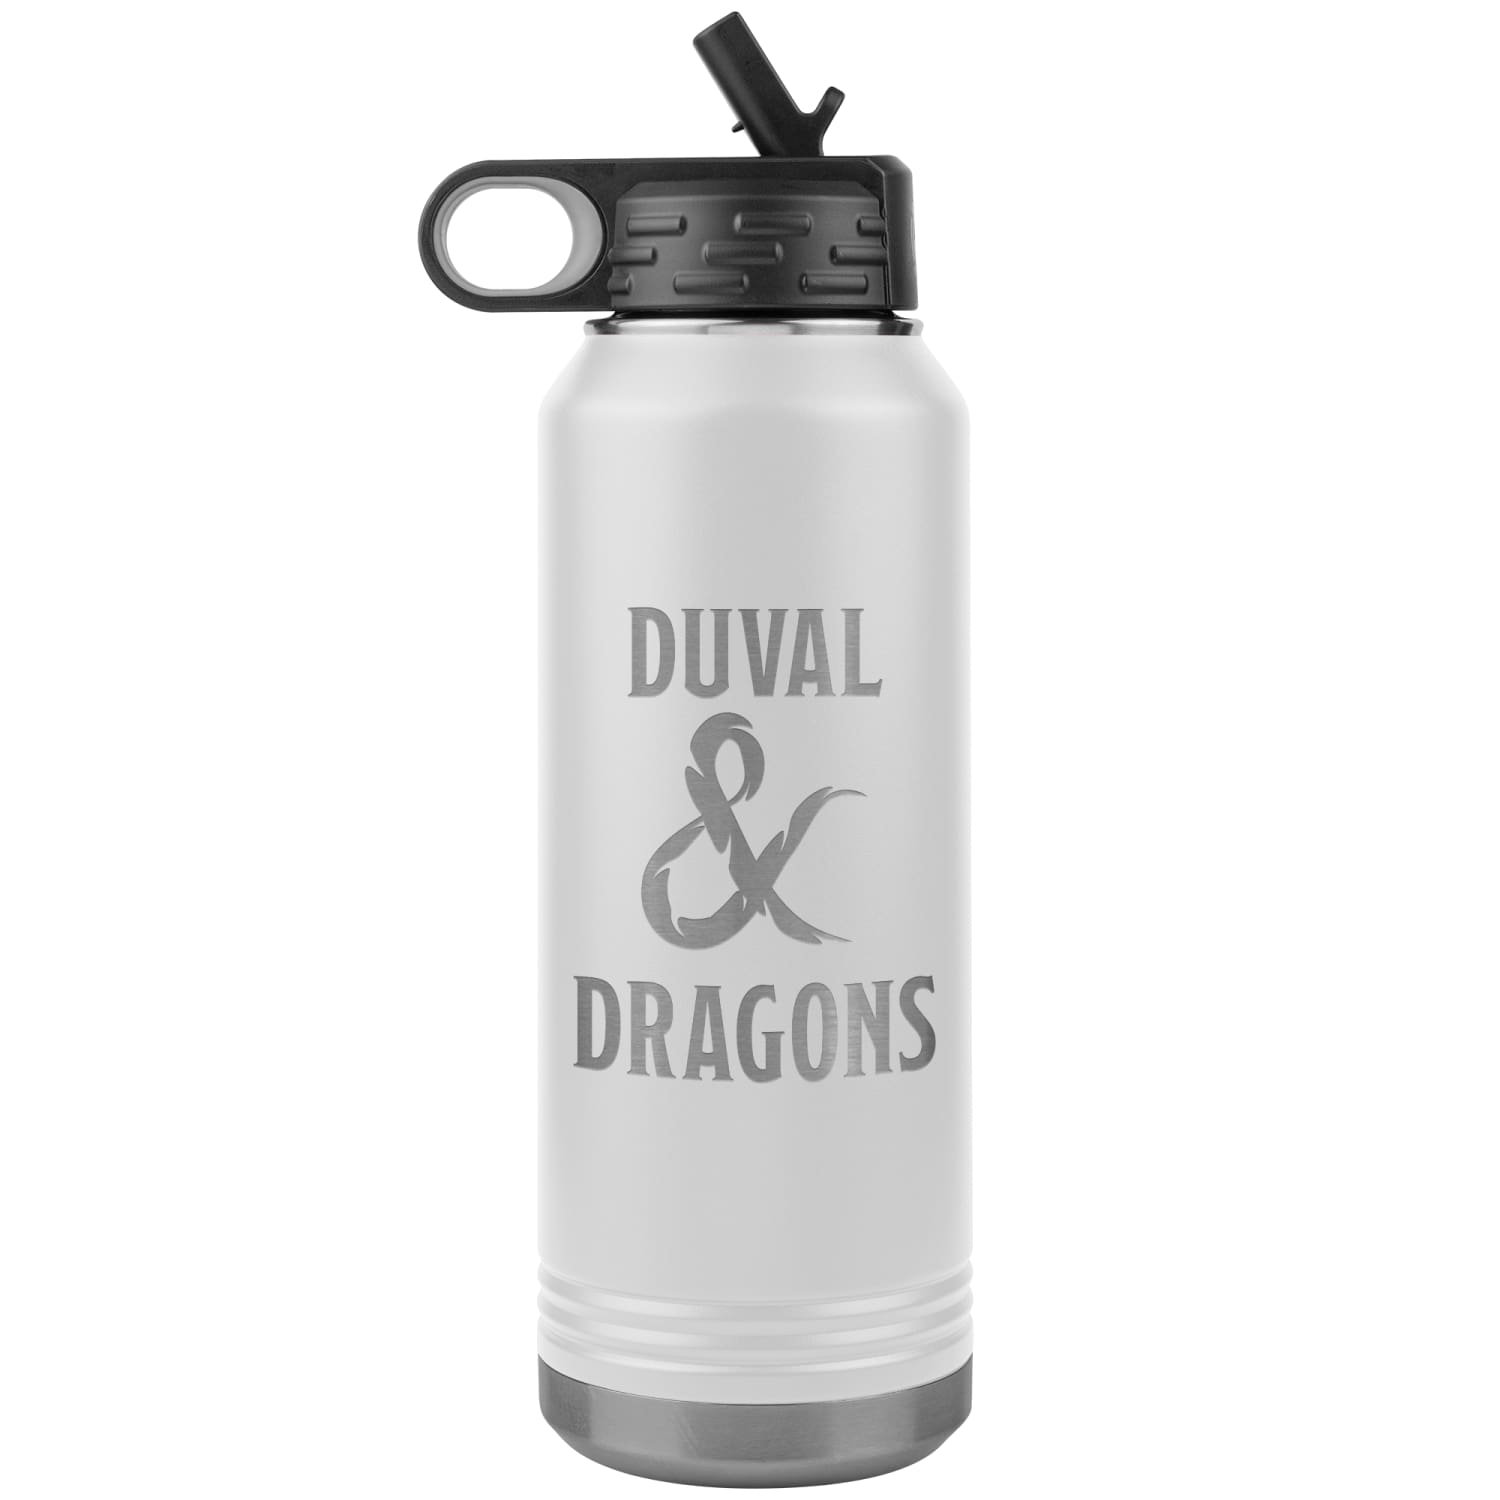 Duval & Dragons Logo 32oz Water Bottle Tumbler - White - Tumblers